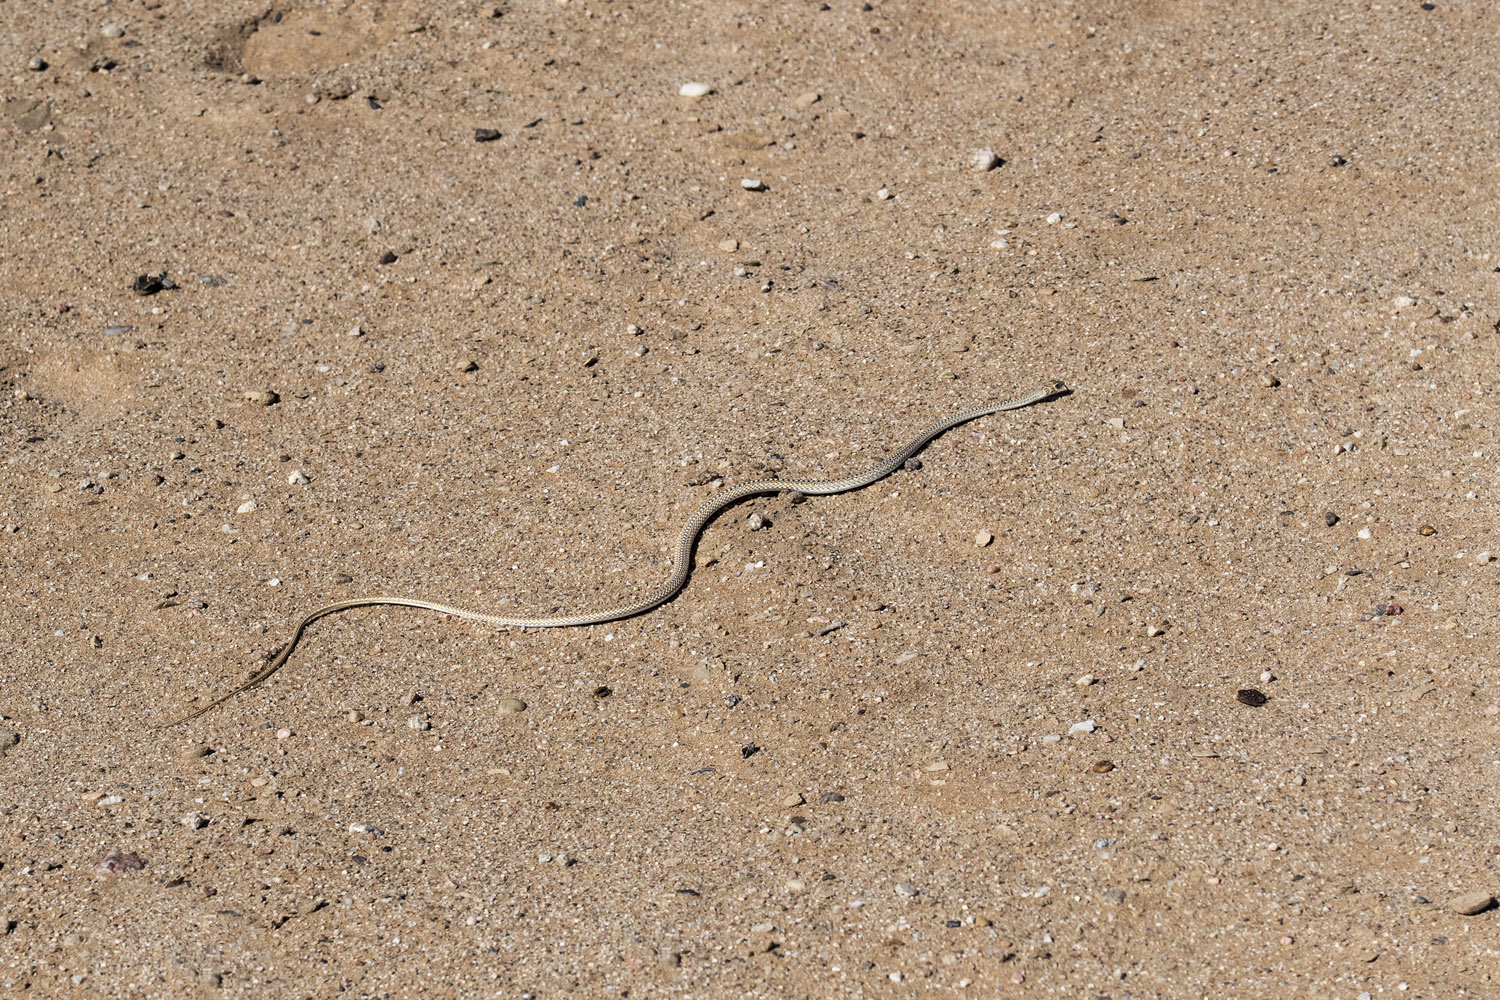 Namibian Sand Snake, Namib-Naukluft NP